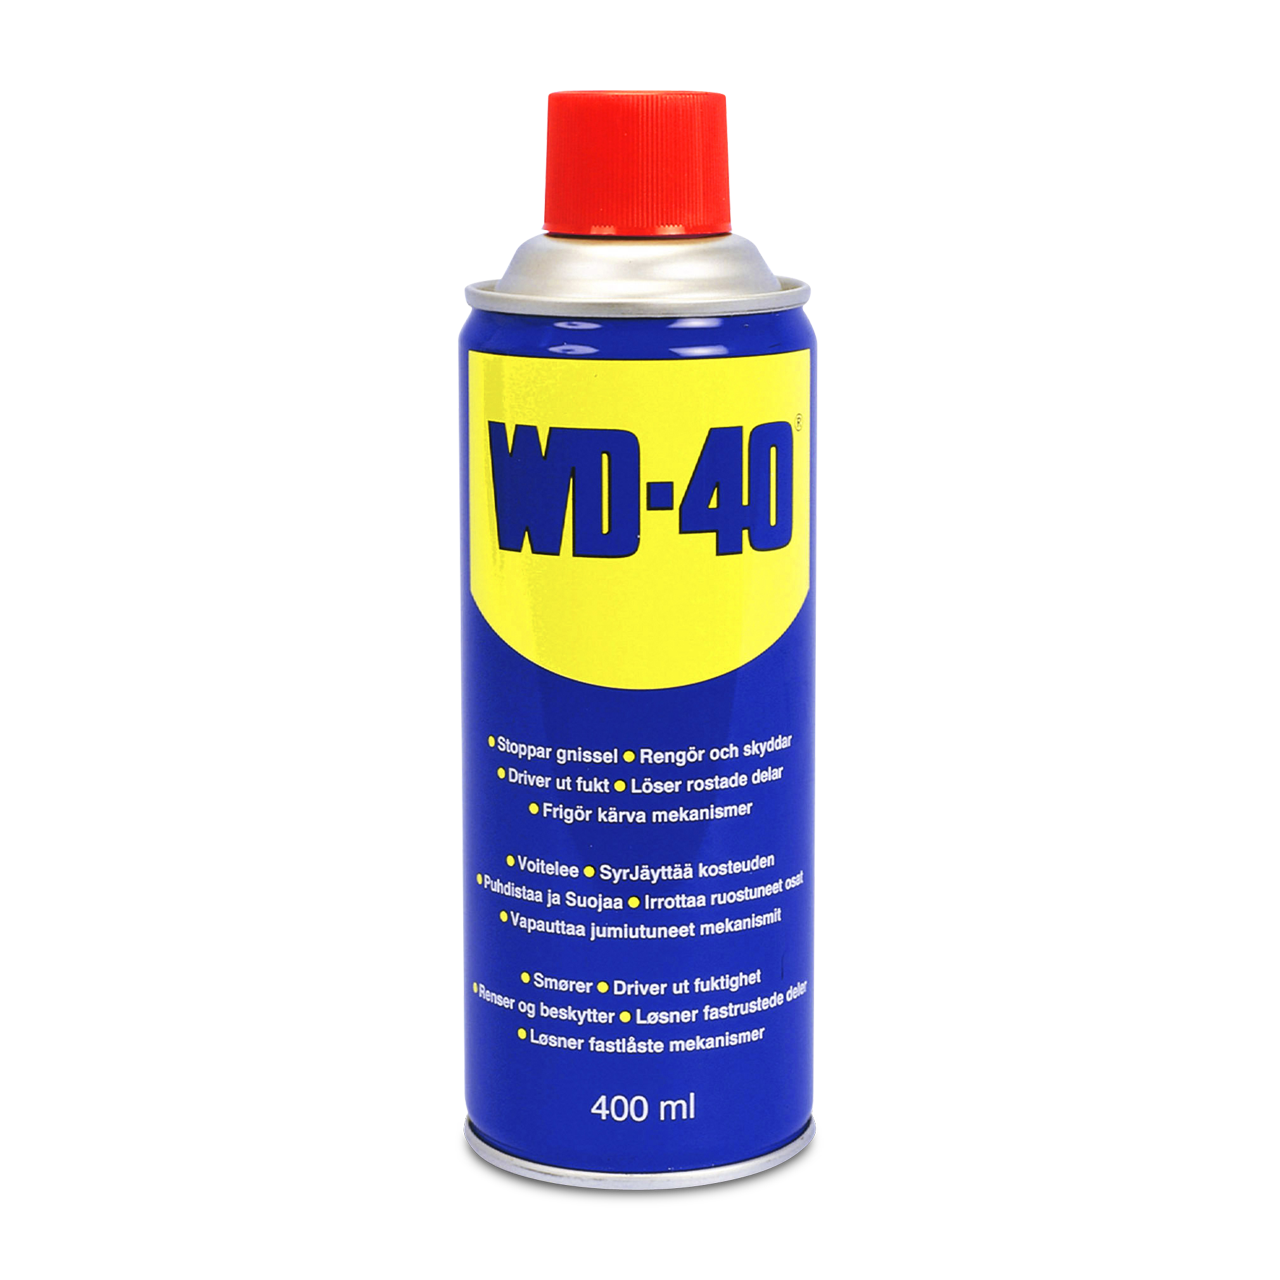 WD-40 Multipurpose Spray 400ml - Price Match Guarantee - xlmoto.co.uk